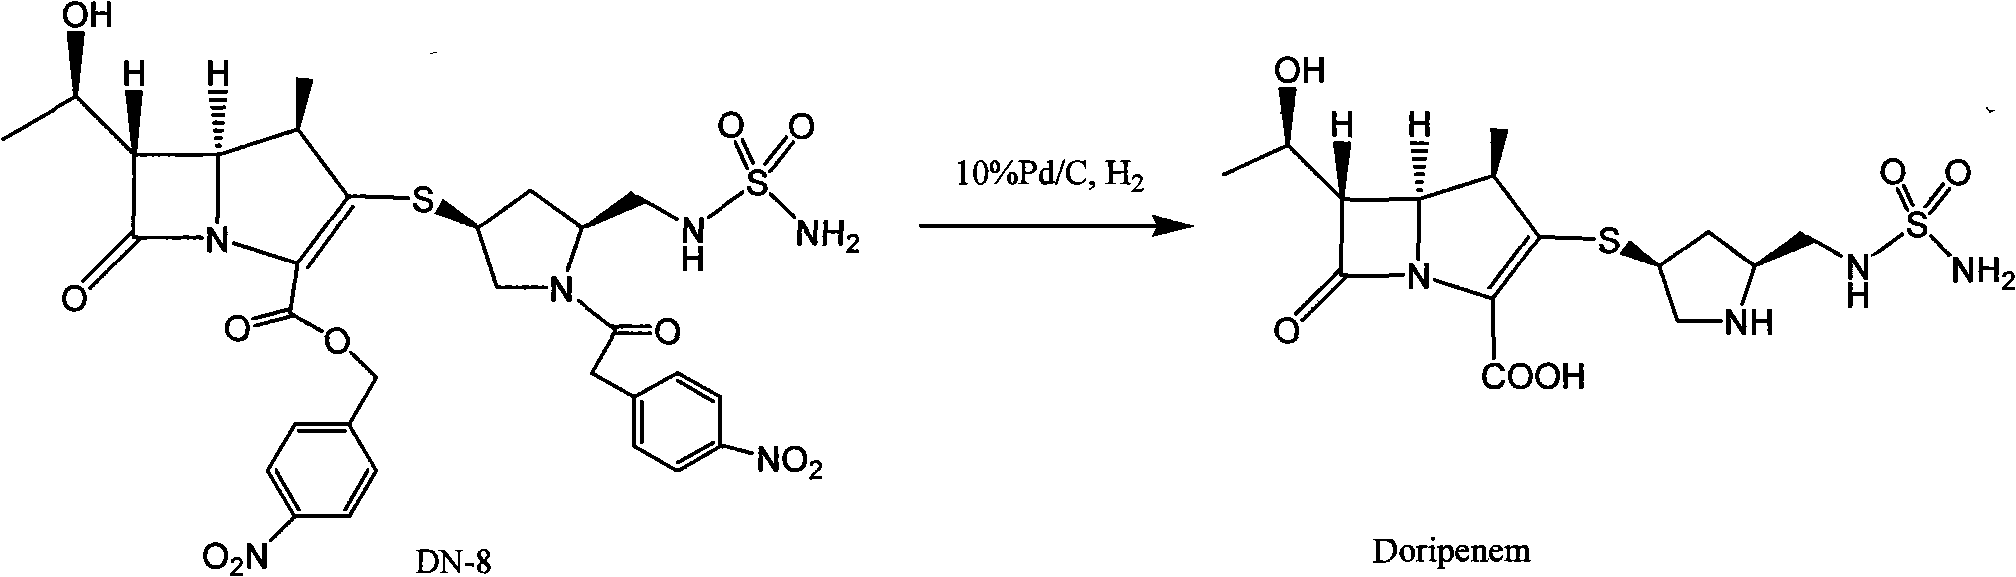 Composition of Doripenem and amino acid